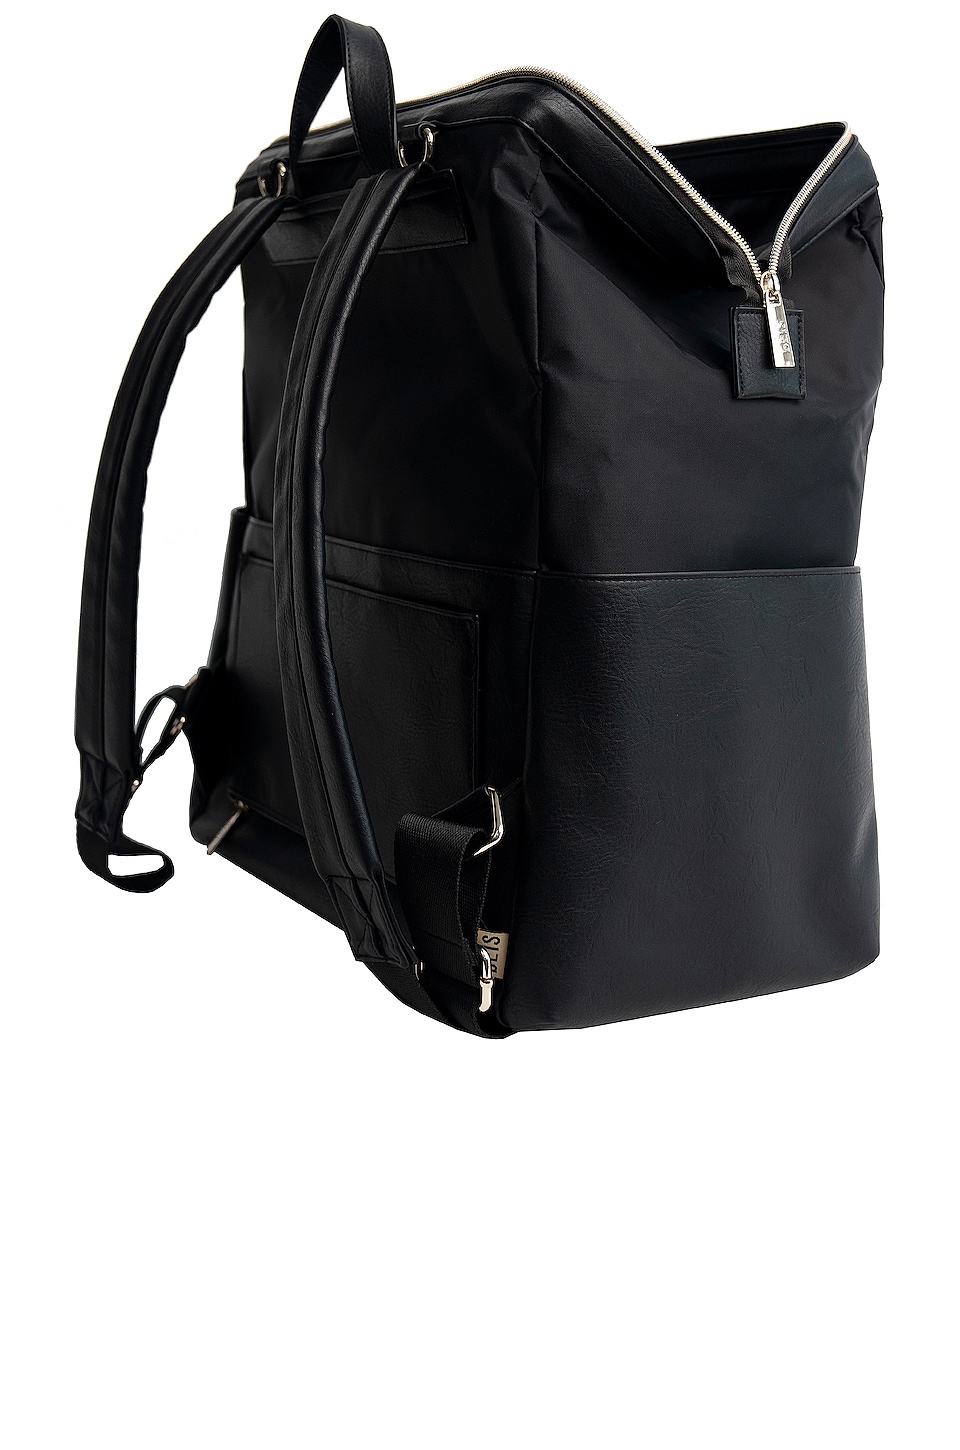 BEIS Backpack Diaper Bag in Black | REVOLVE